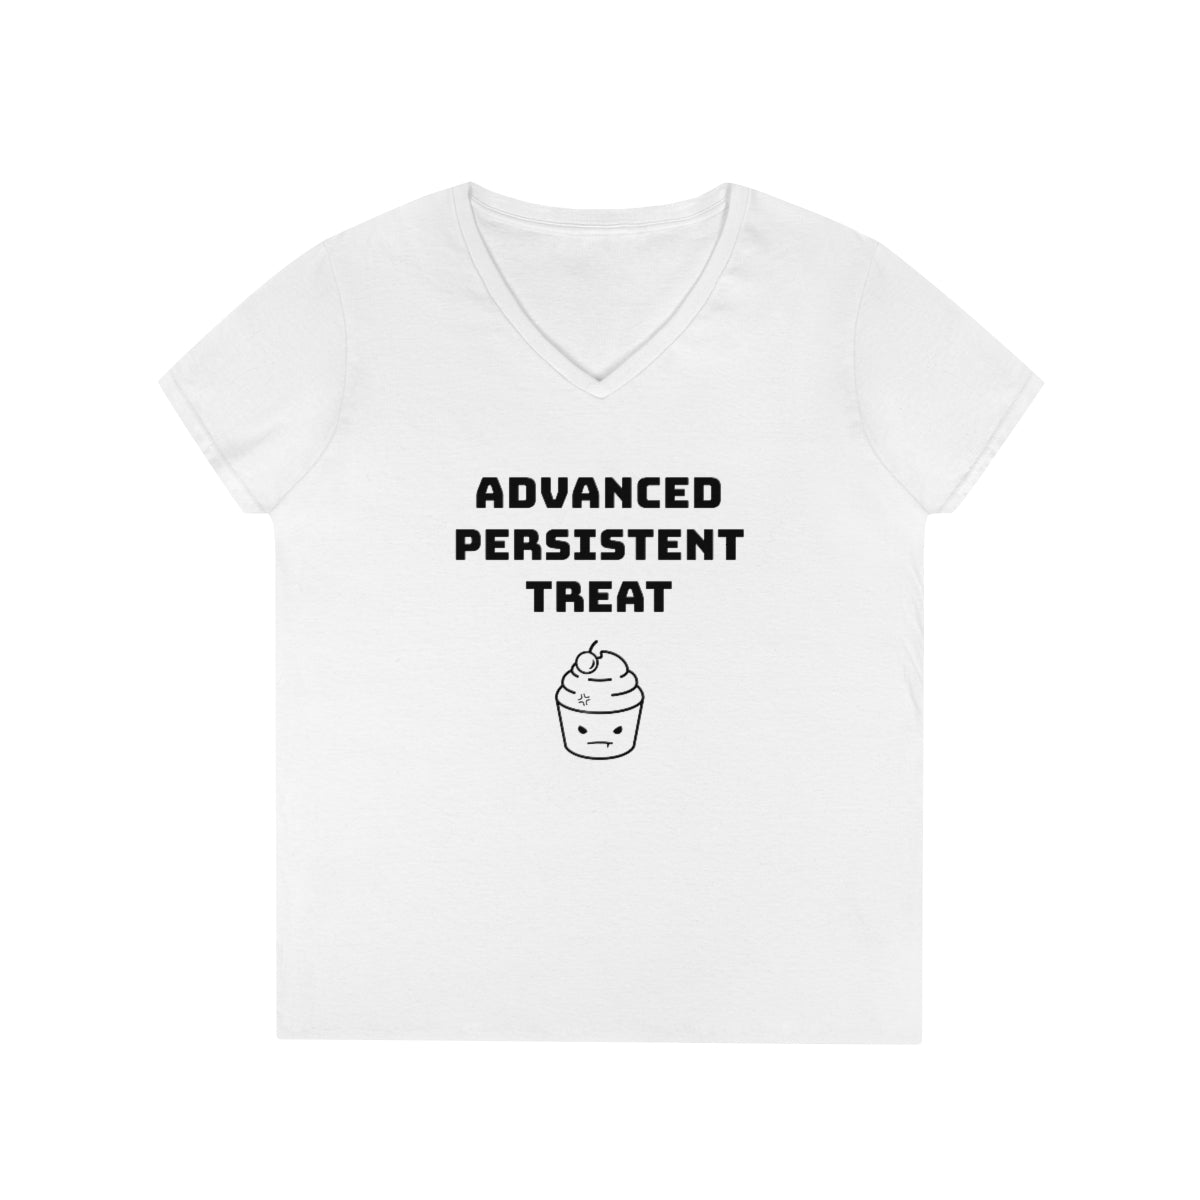 Advanced Persistent Treat Ladies' V-Neck T-Shirt